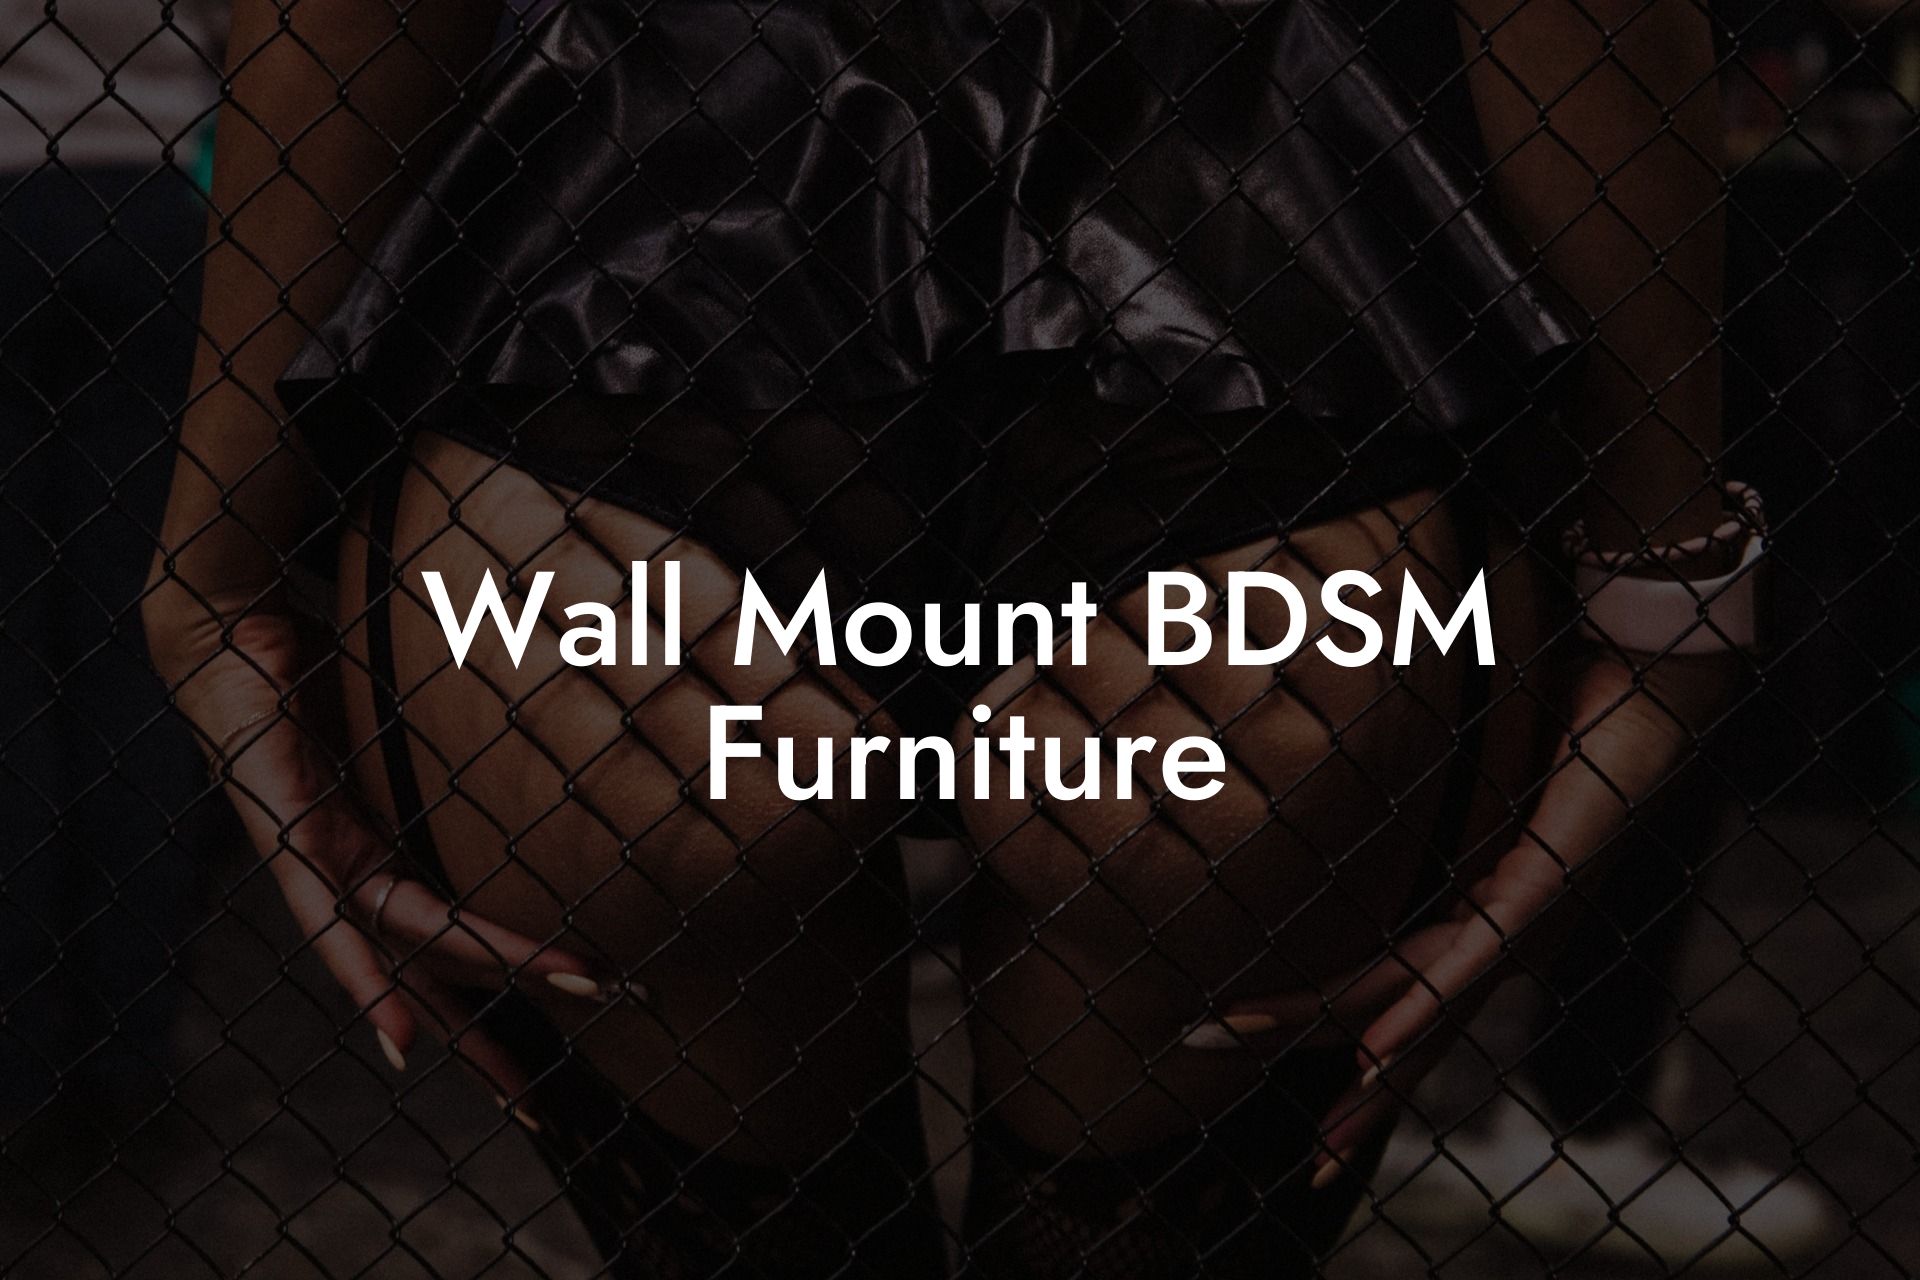 Wall Mount BDSM Furniture